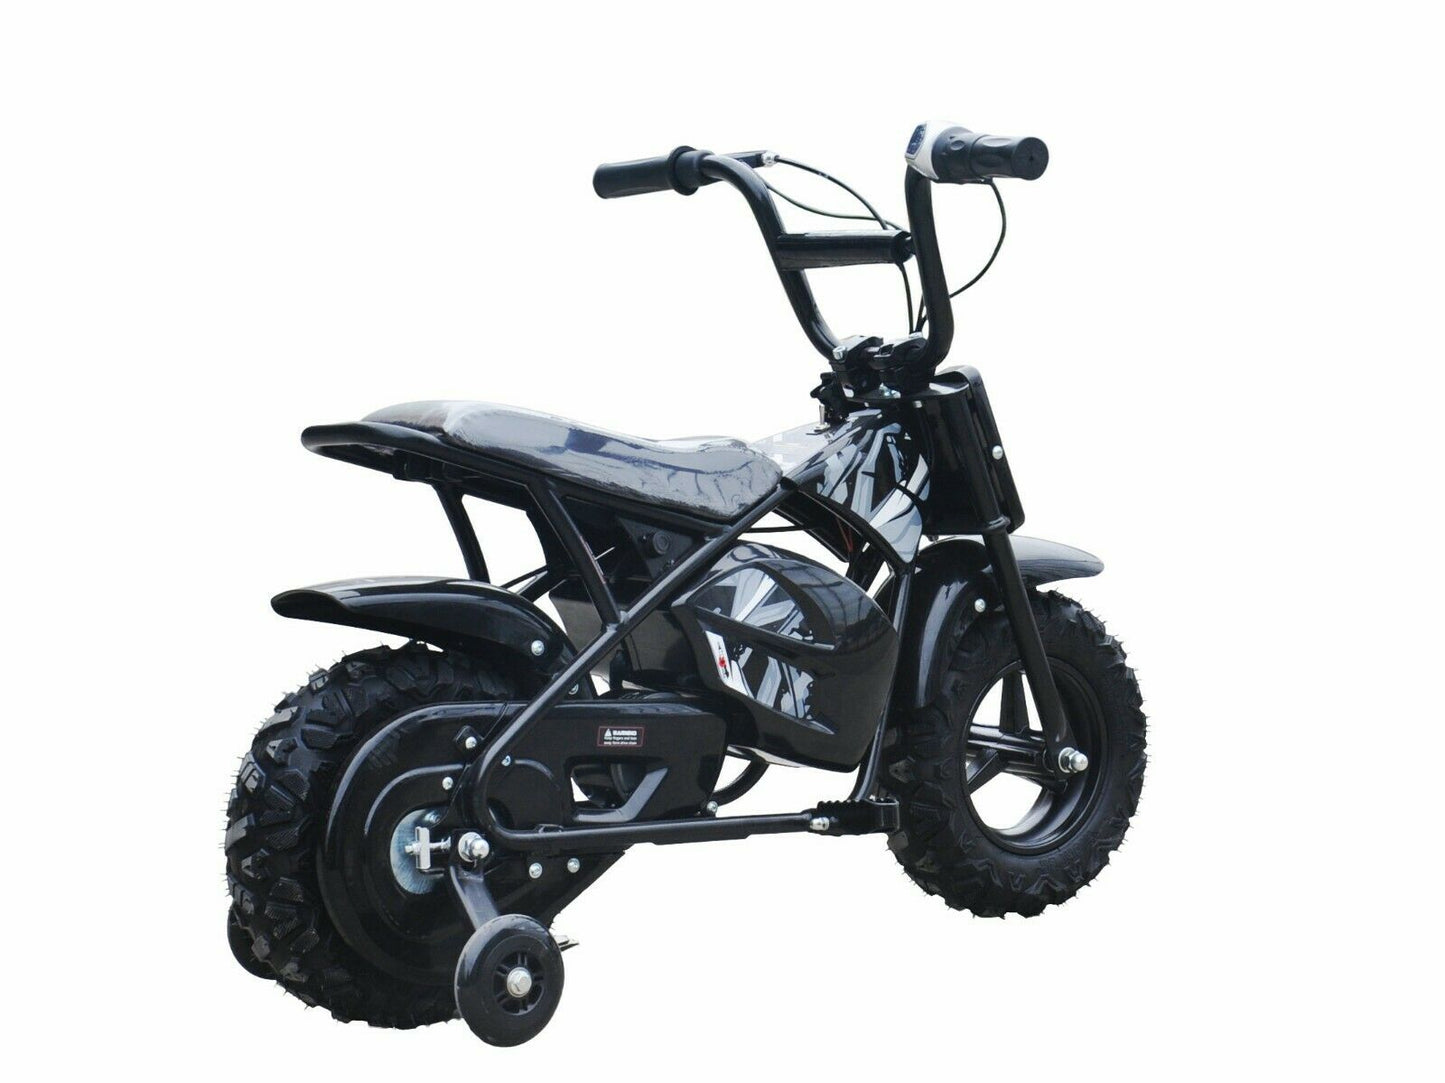 Children’s Electric 250w Monkey Bike Pit Blike Dirt Bike in Black